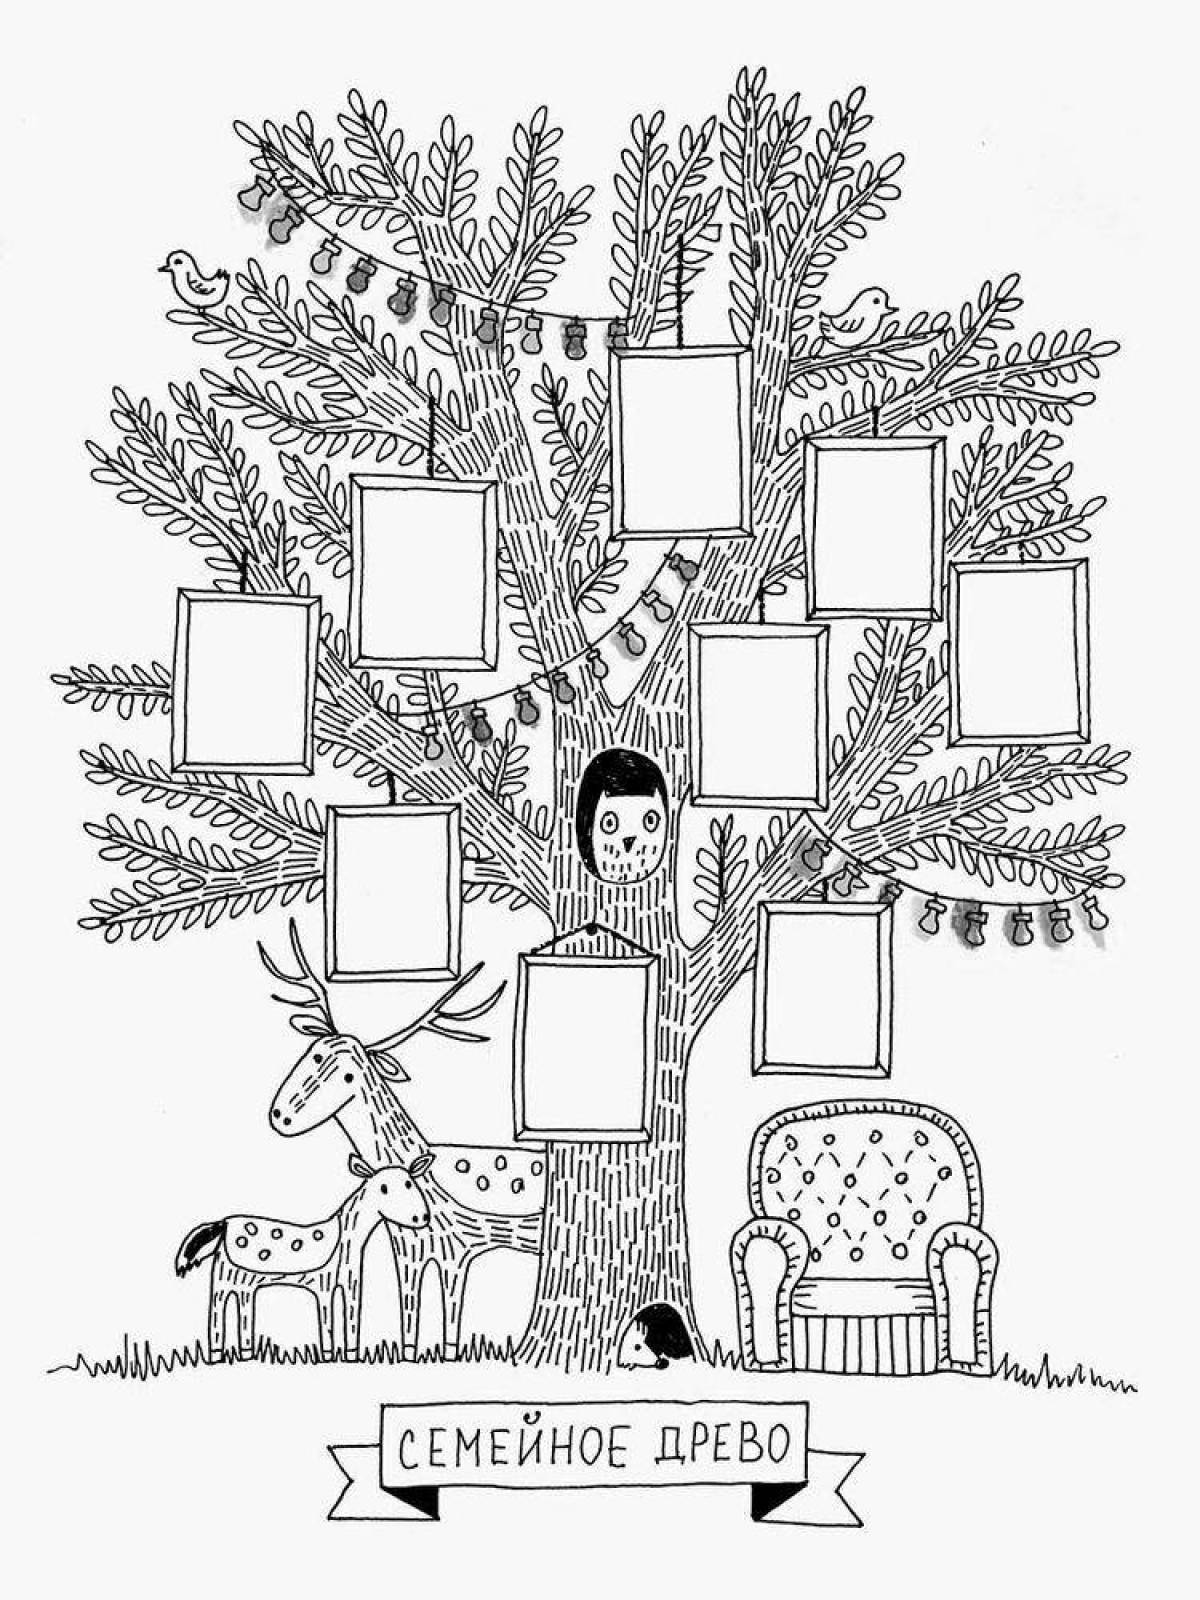 Fun family tree coloring book